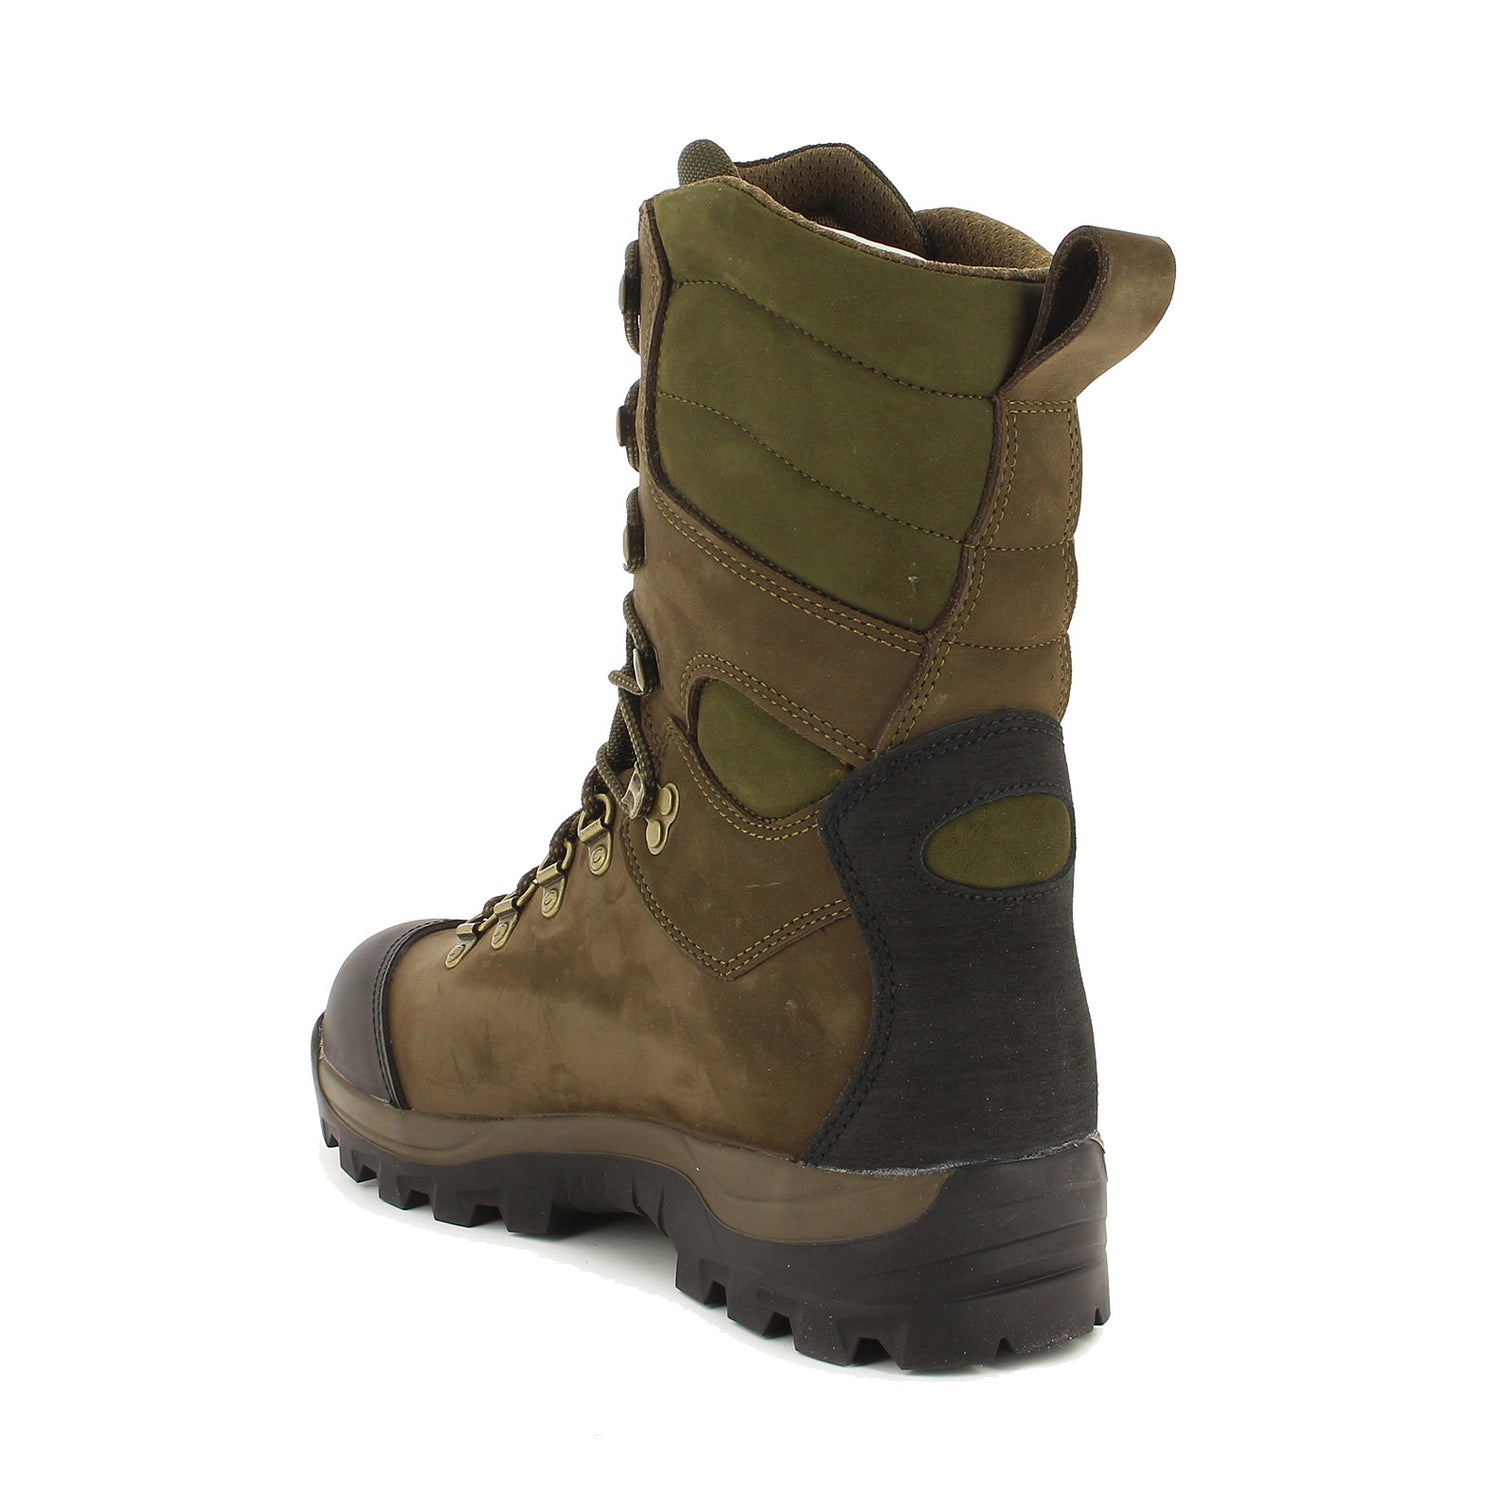 vanter Forfølge Retouch Chiruca Alaska GORE-TEX Hiking Boots – New Forest Clothing